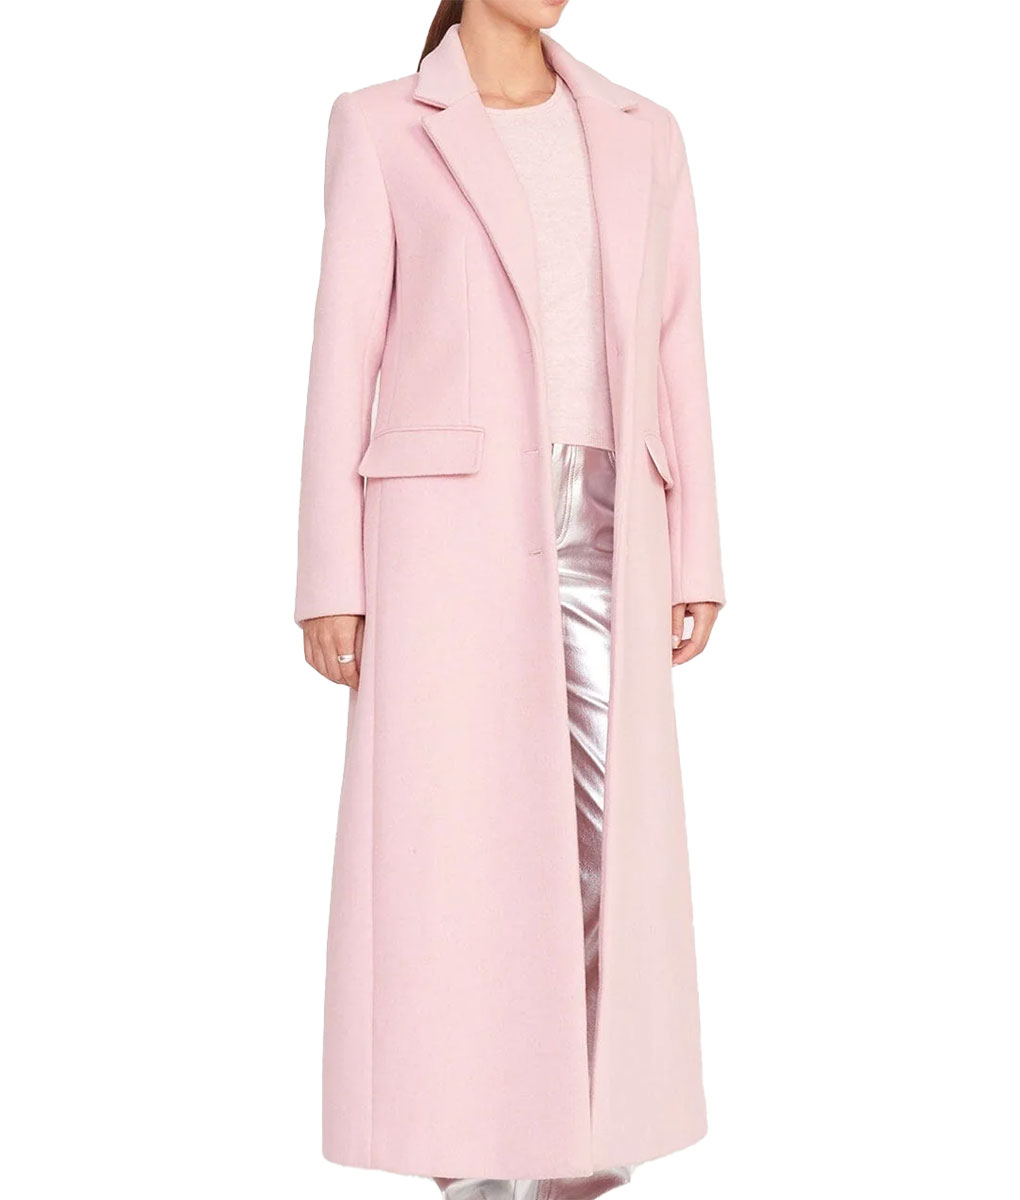 Selena Gomez Rare Beauty Pink Coat (5)